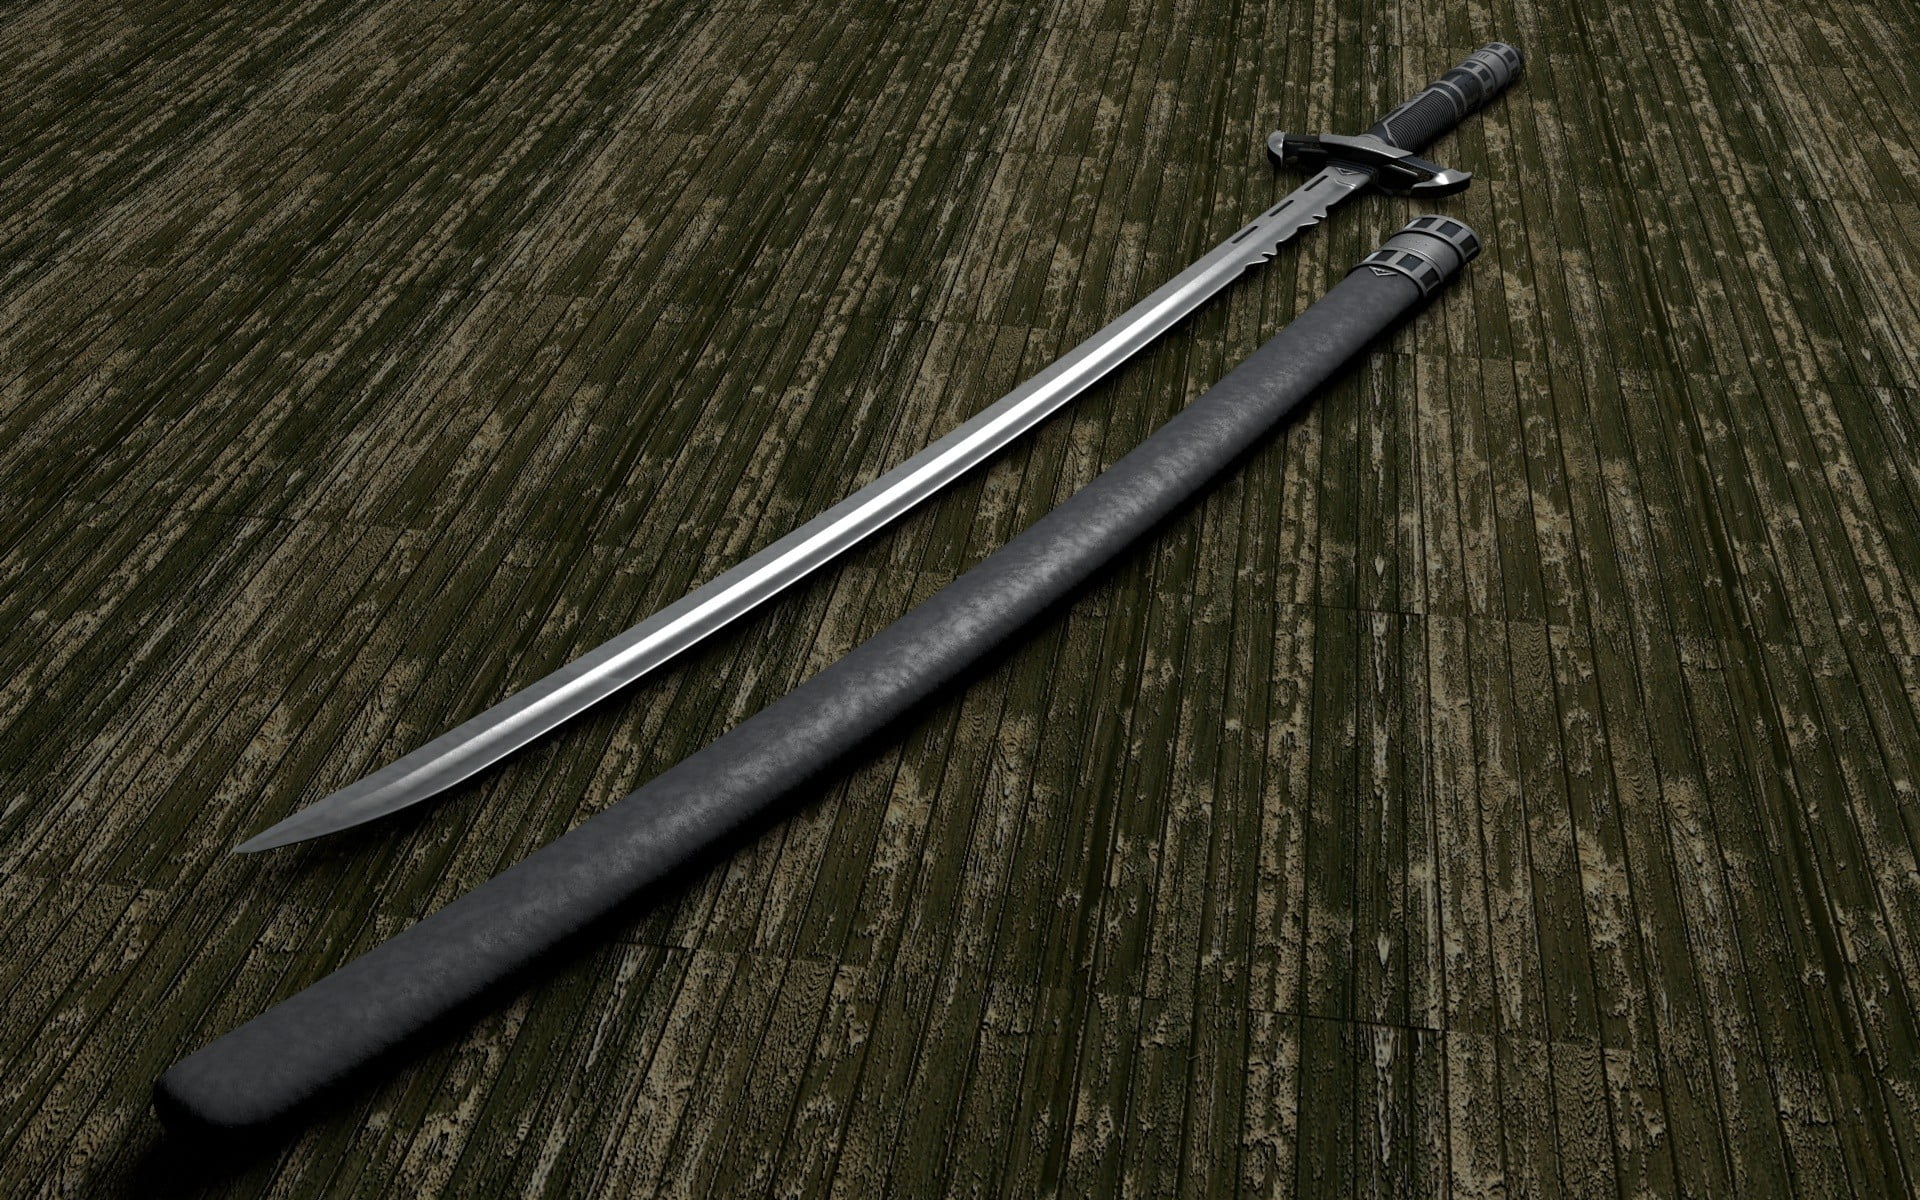 black katana sword, weapon, wood - material, high angle view